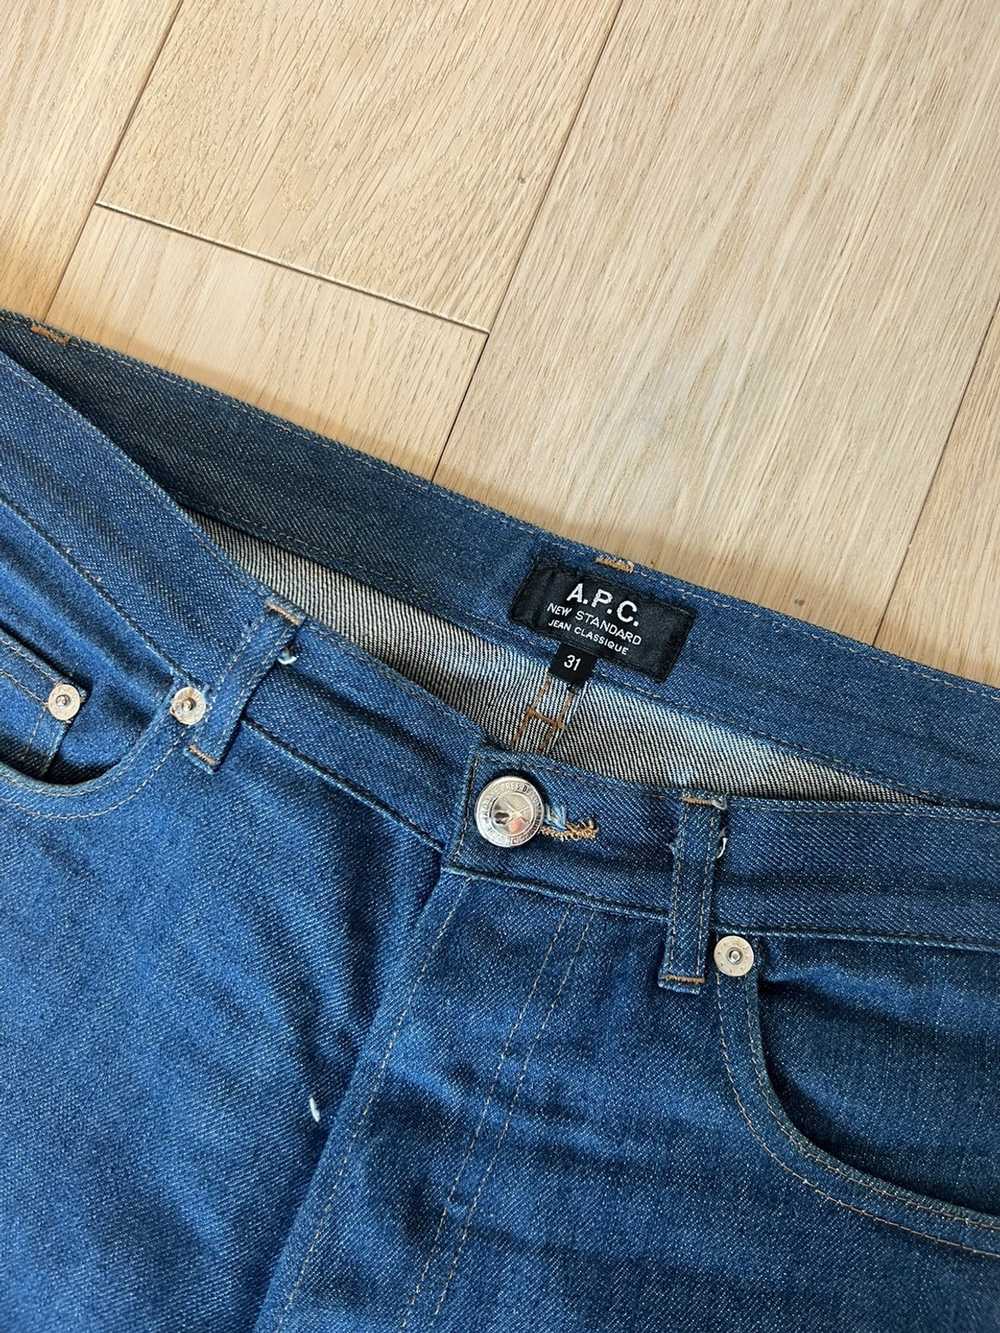 A.P.C. APC New Standard Jeans - image 3